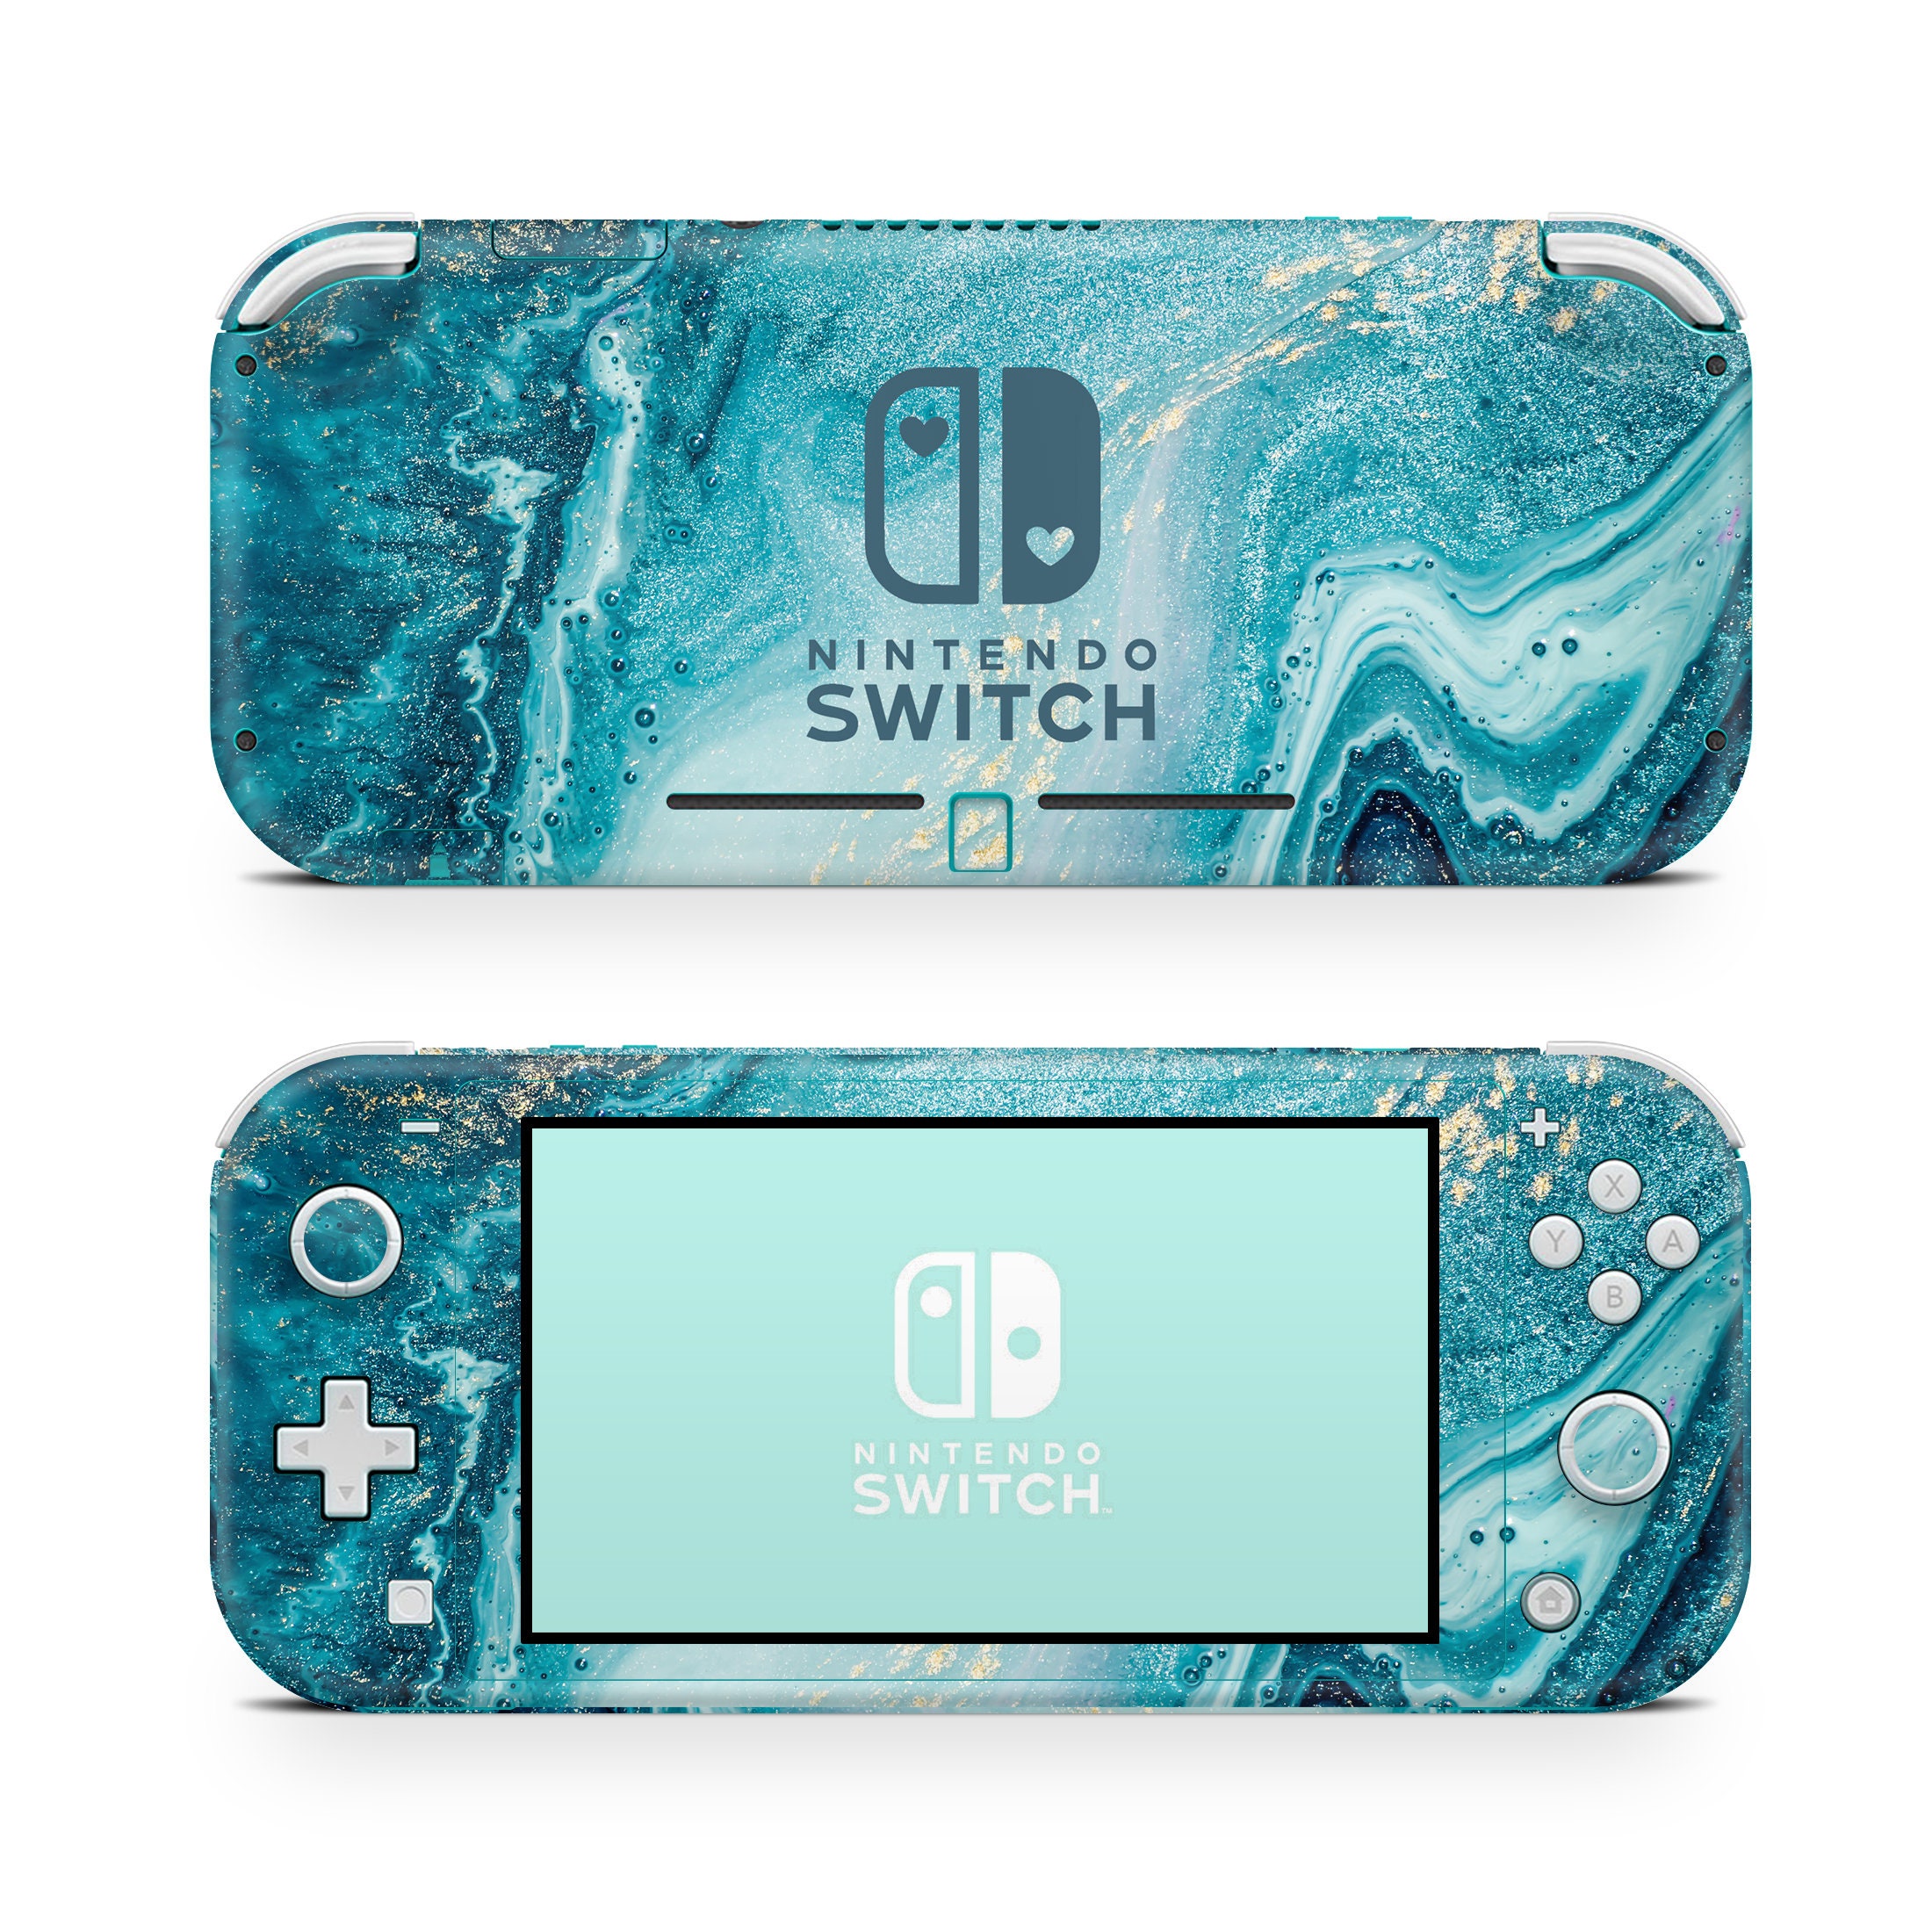 Passende linse Revival Nintendo Switch Lite Skin Wrap Premium Vinyl Blue Turquoise - Etsy